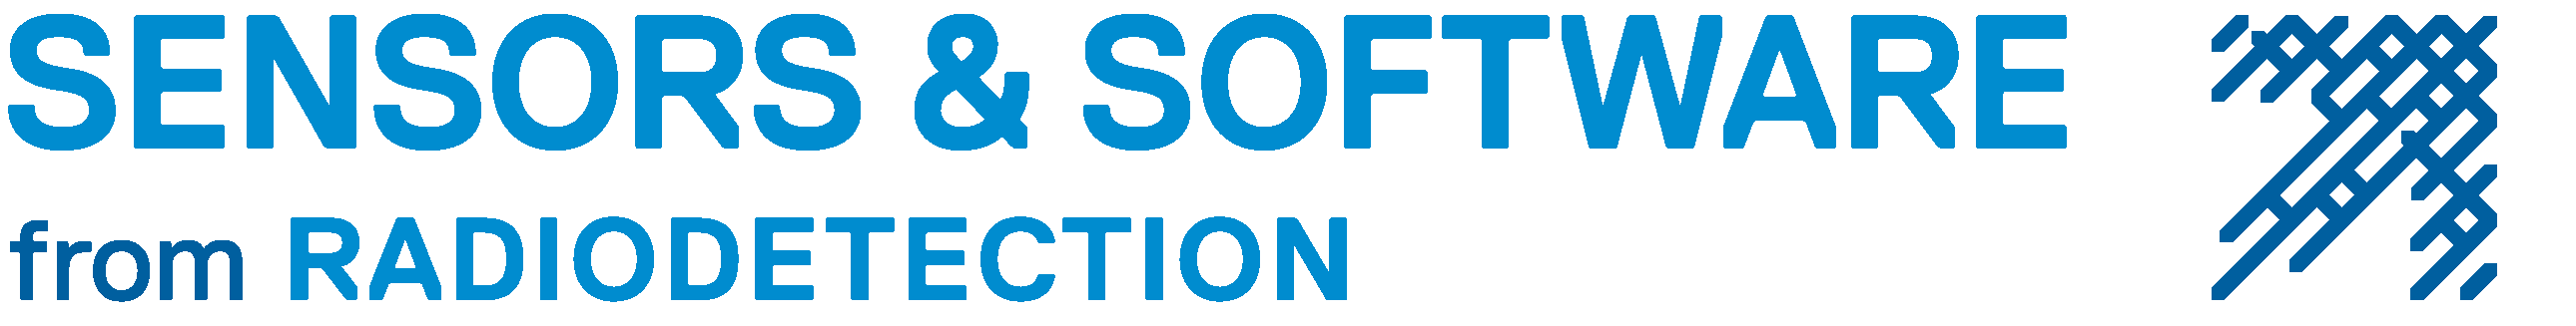 Sensoft logo